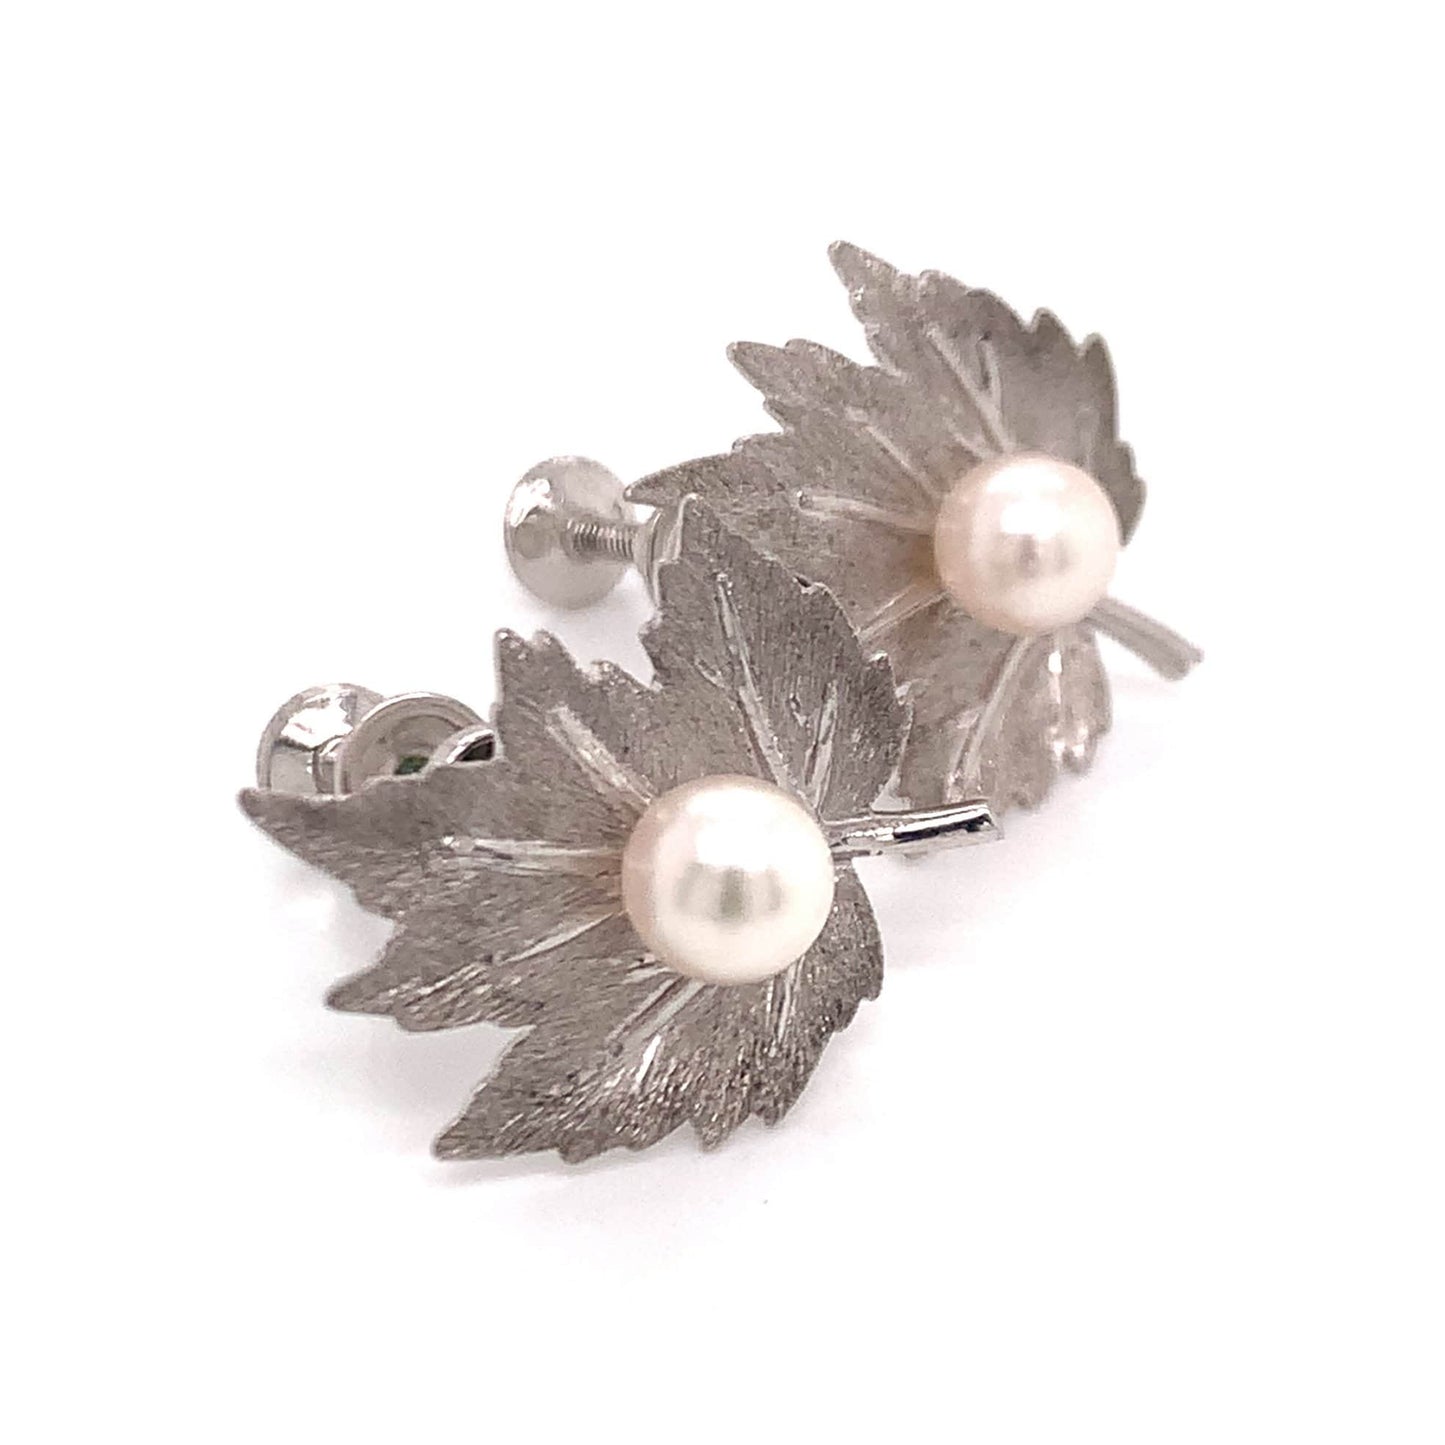 Mikimoto Estate Akoya Pearl Clip On Earrings Sterling Silver 6.15 mm M170 - Certified Estate Jewelry